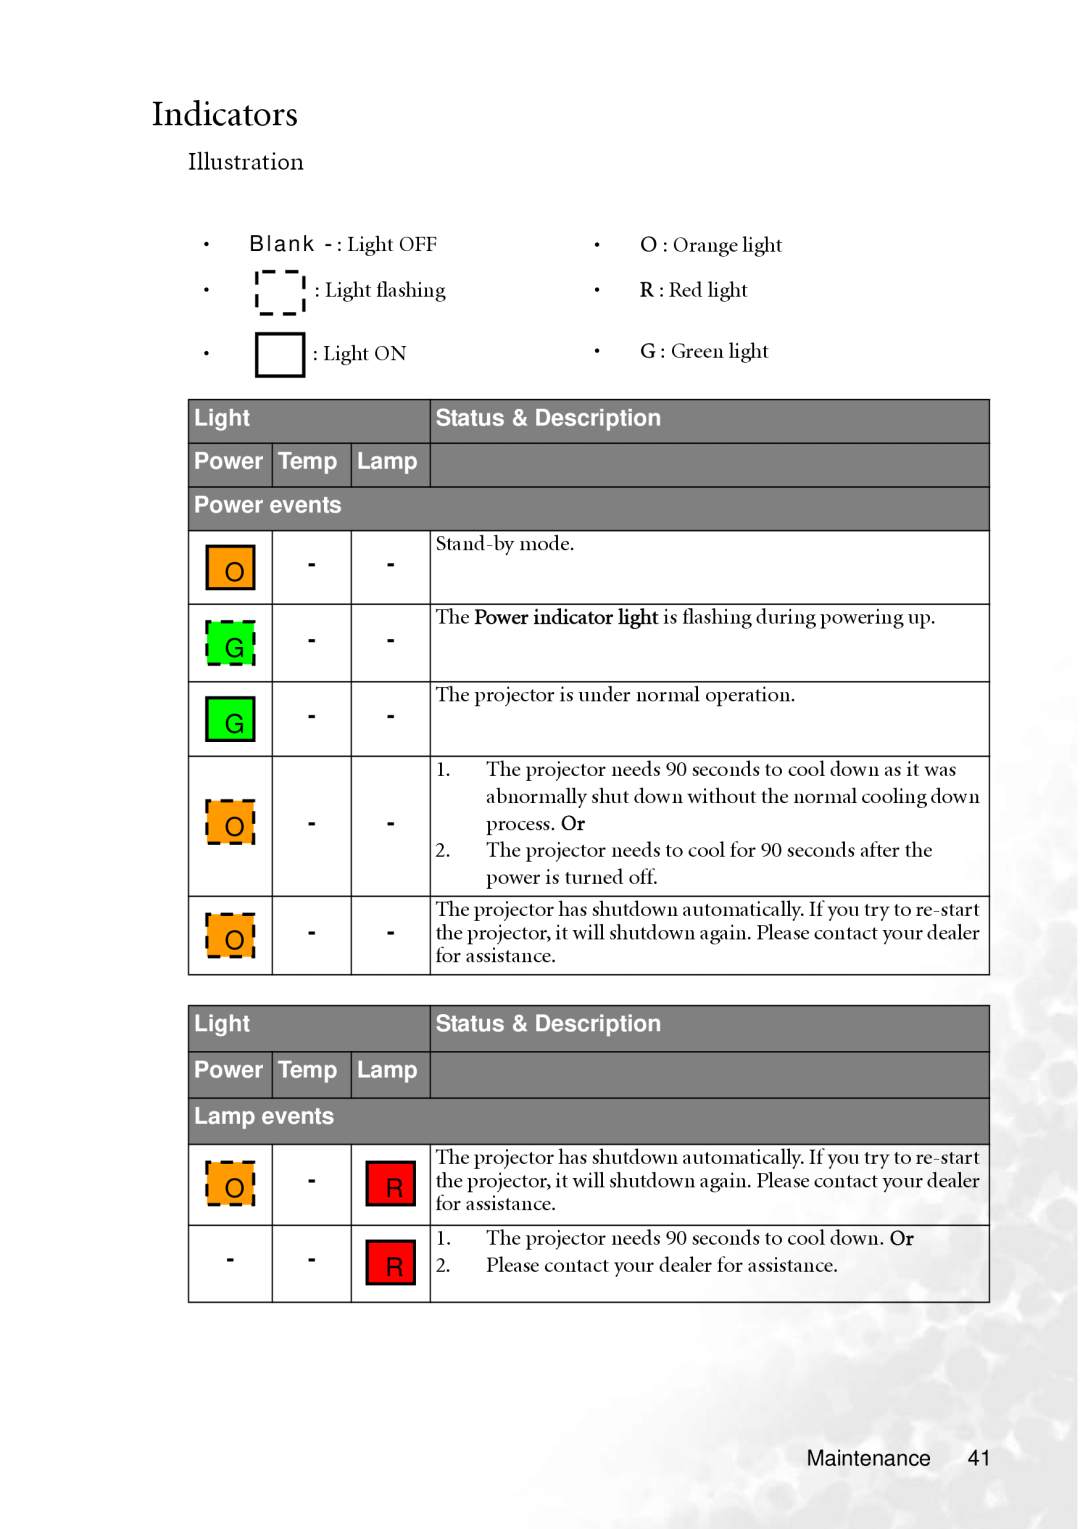 BenQ MP610 user manual Indicators, Light, Status & Description, Temp, Power events, Lamp events 